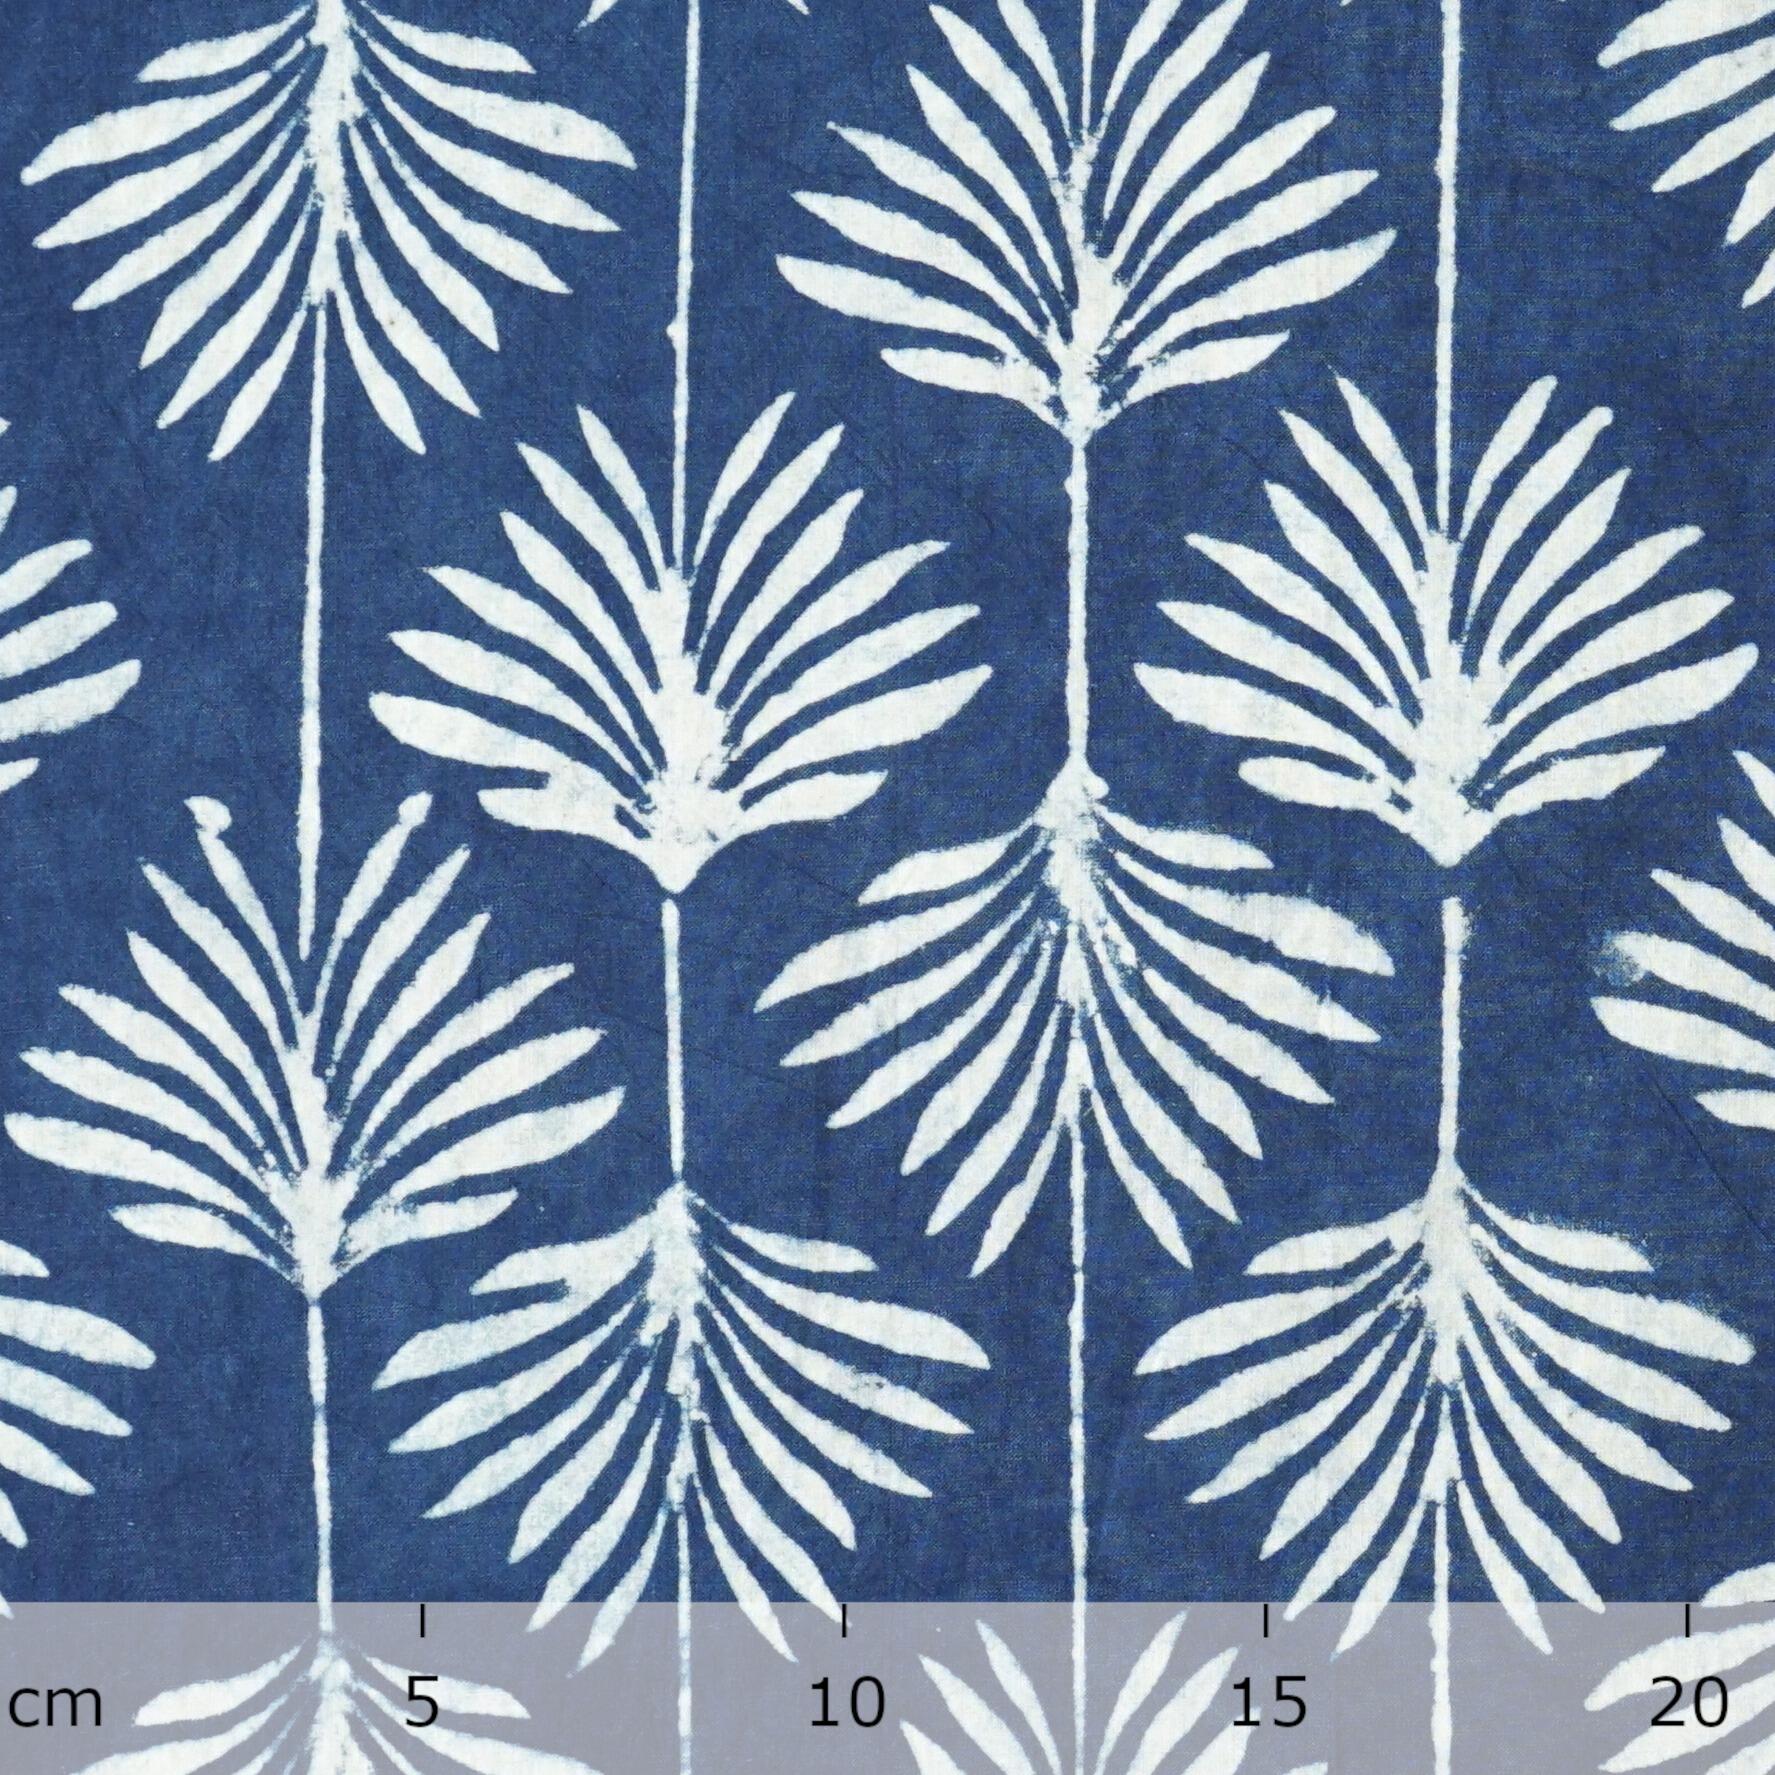 SIK15 - Indian Woodblock-Printed Cotton Fabric - Palm Leaf Design - Indigo Dye - Ruler